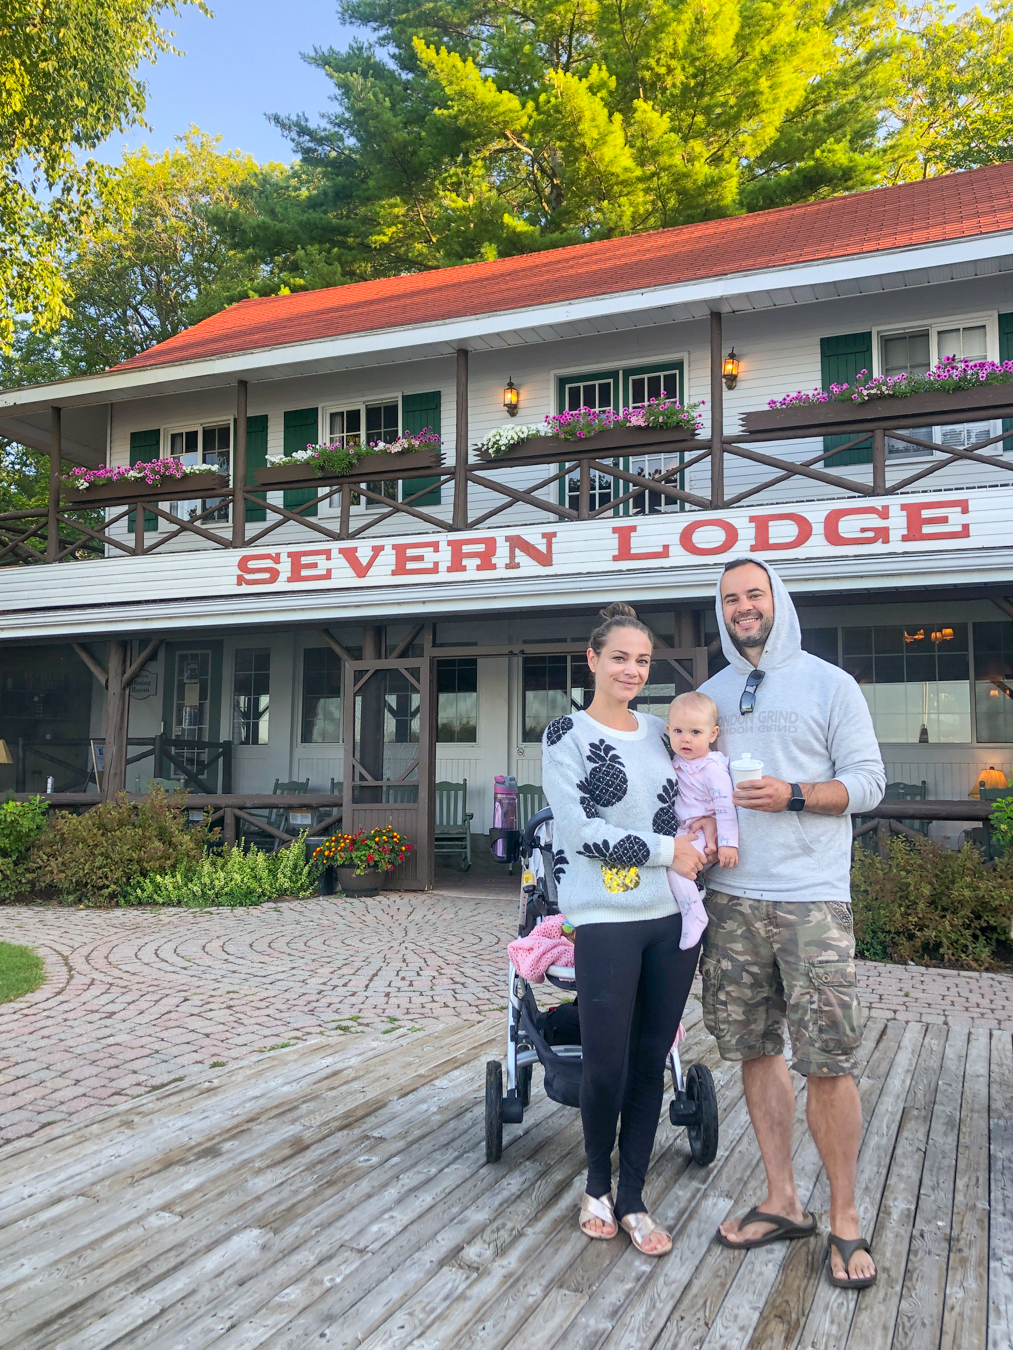 All Inclusive Ontario Resort Severn Lodge Muskoka Resorts of Ontario